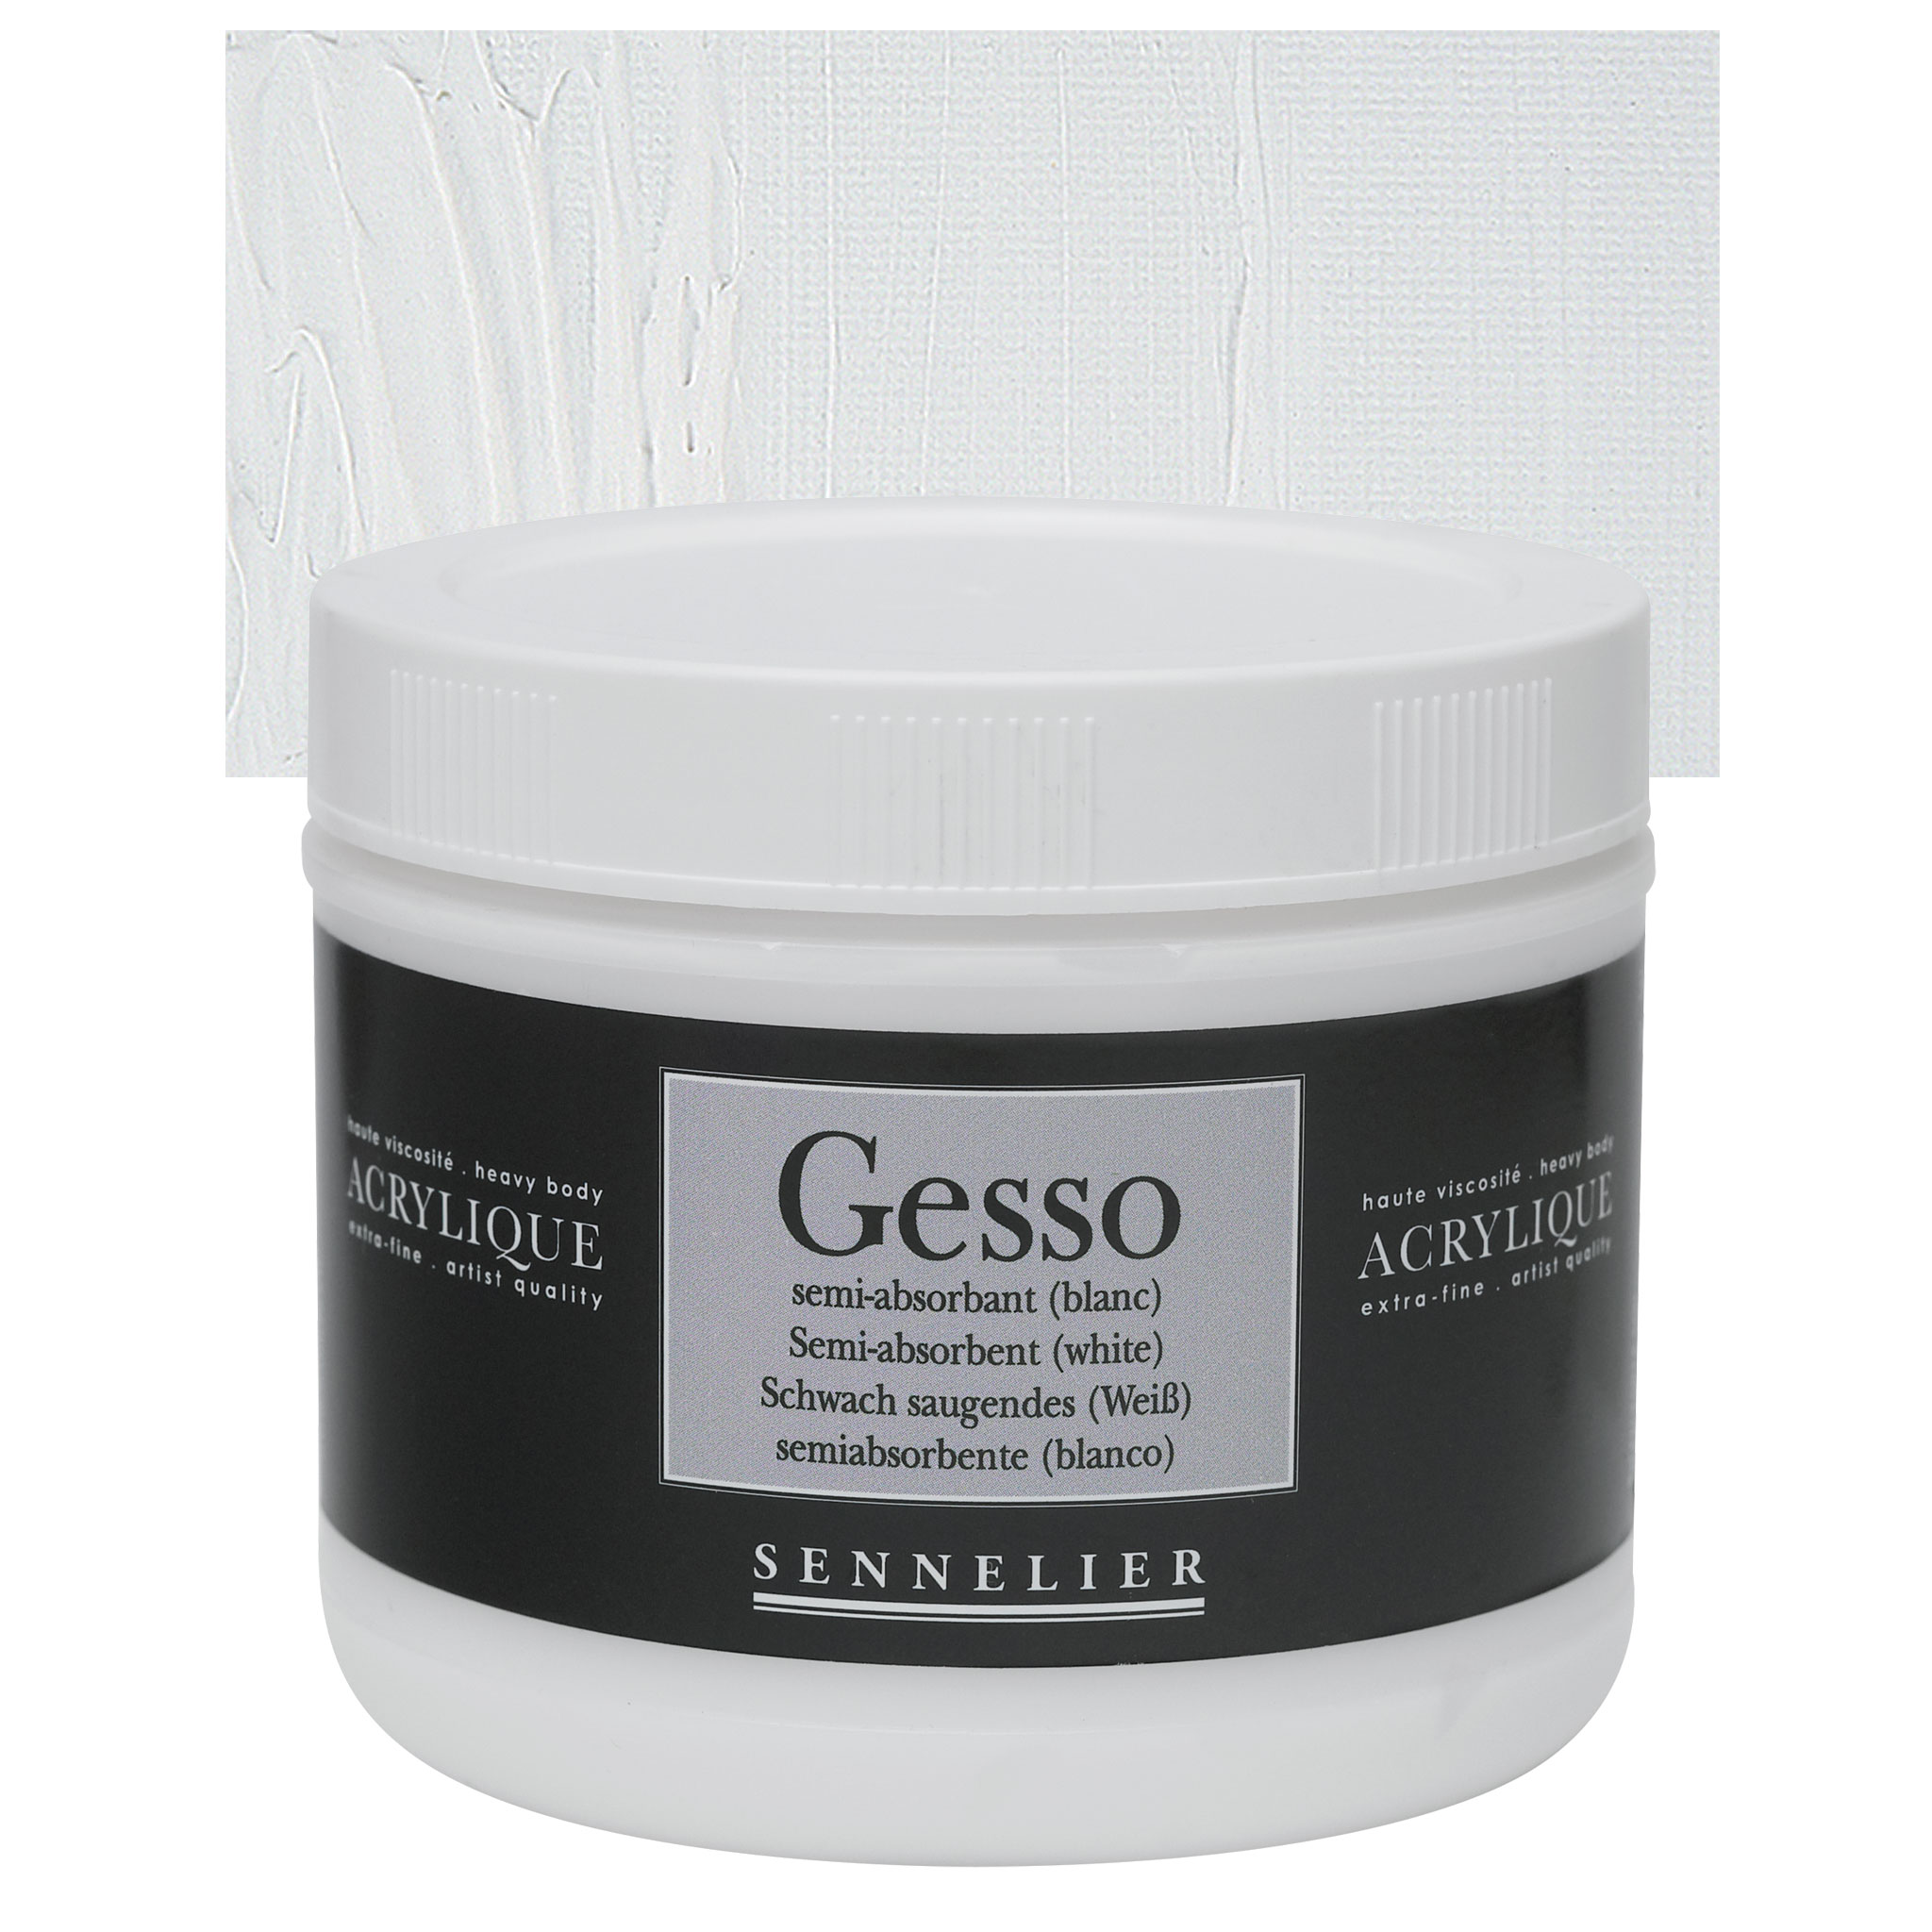 Sennelier Acrylic Gesso - 500 ml, White, Semi-Absorbent Gessor for Watercolor